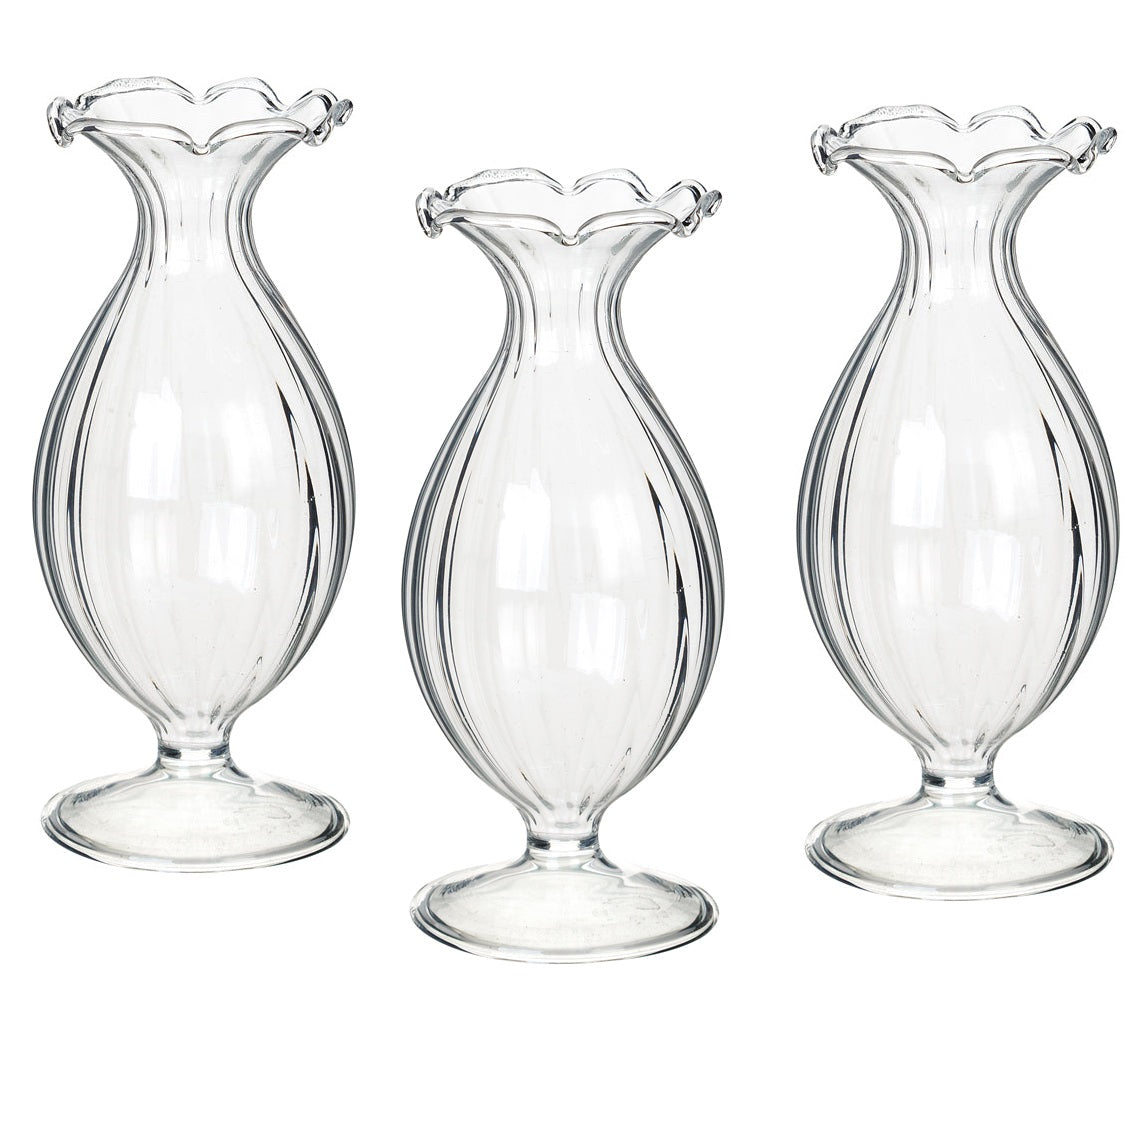 Small frill bud vase set of three